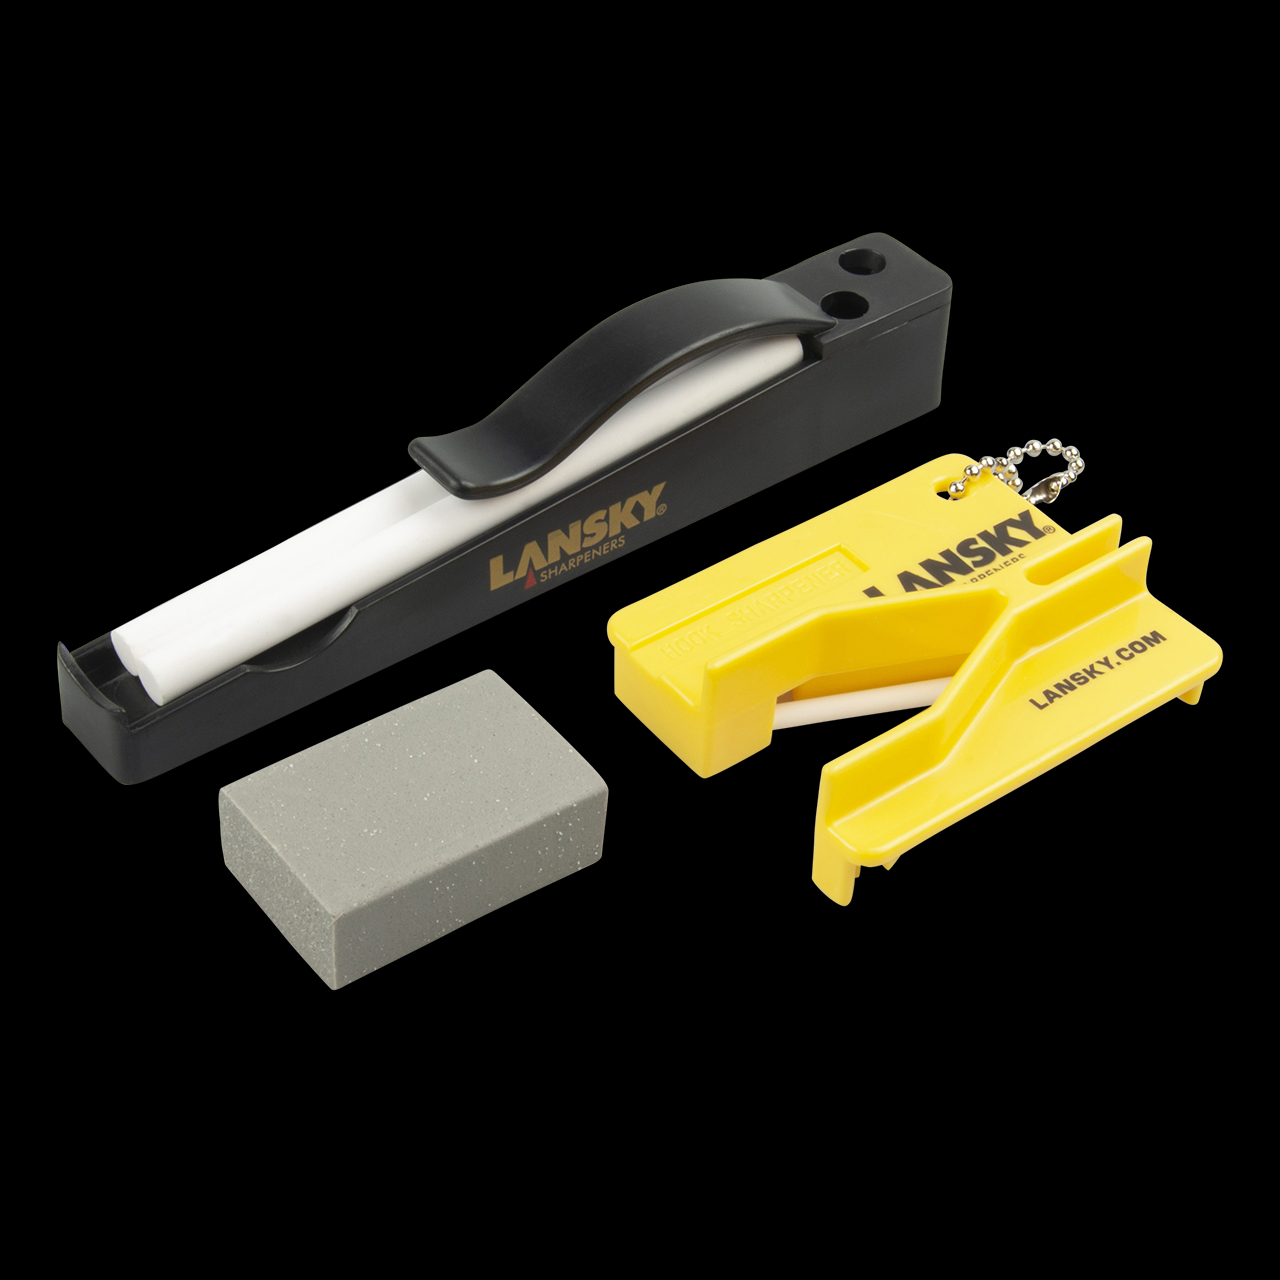 Lansky Roadie Knife Sharpener 8 In 1 Key Tool - KnifeCenter - ROAD1